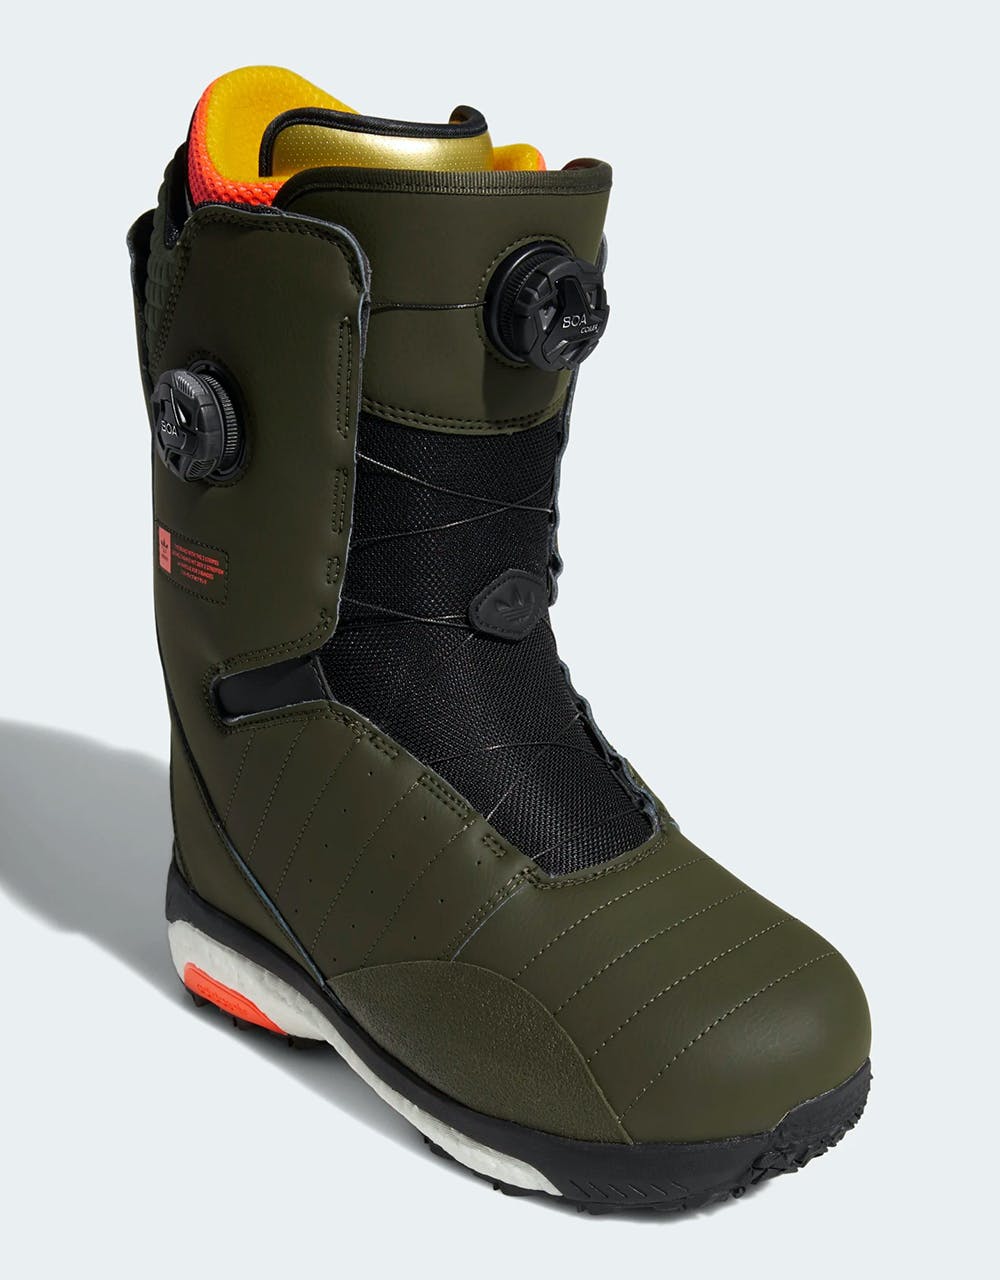 Adidas Acerra 3ST ADV 2020 Snowboard Boots - Night Cargo/Black/Red